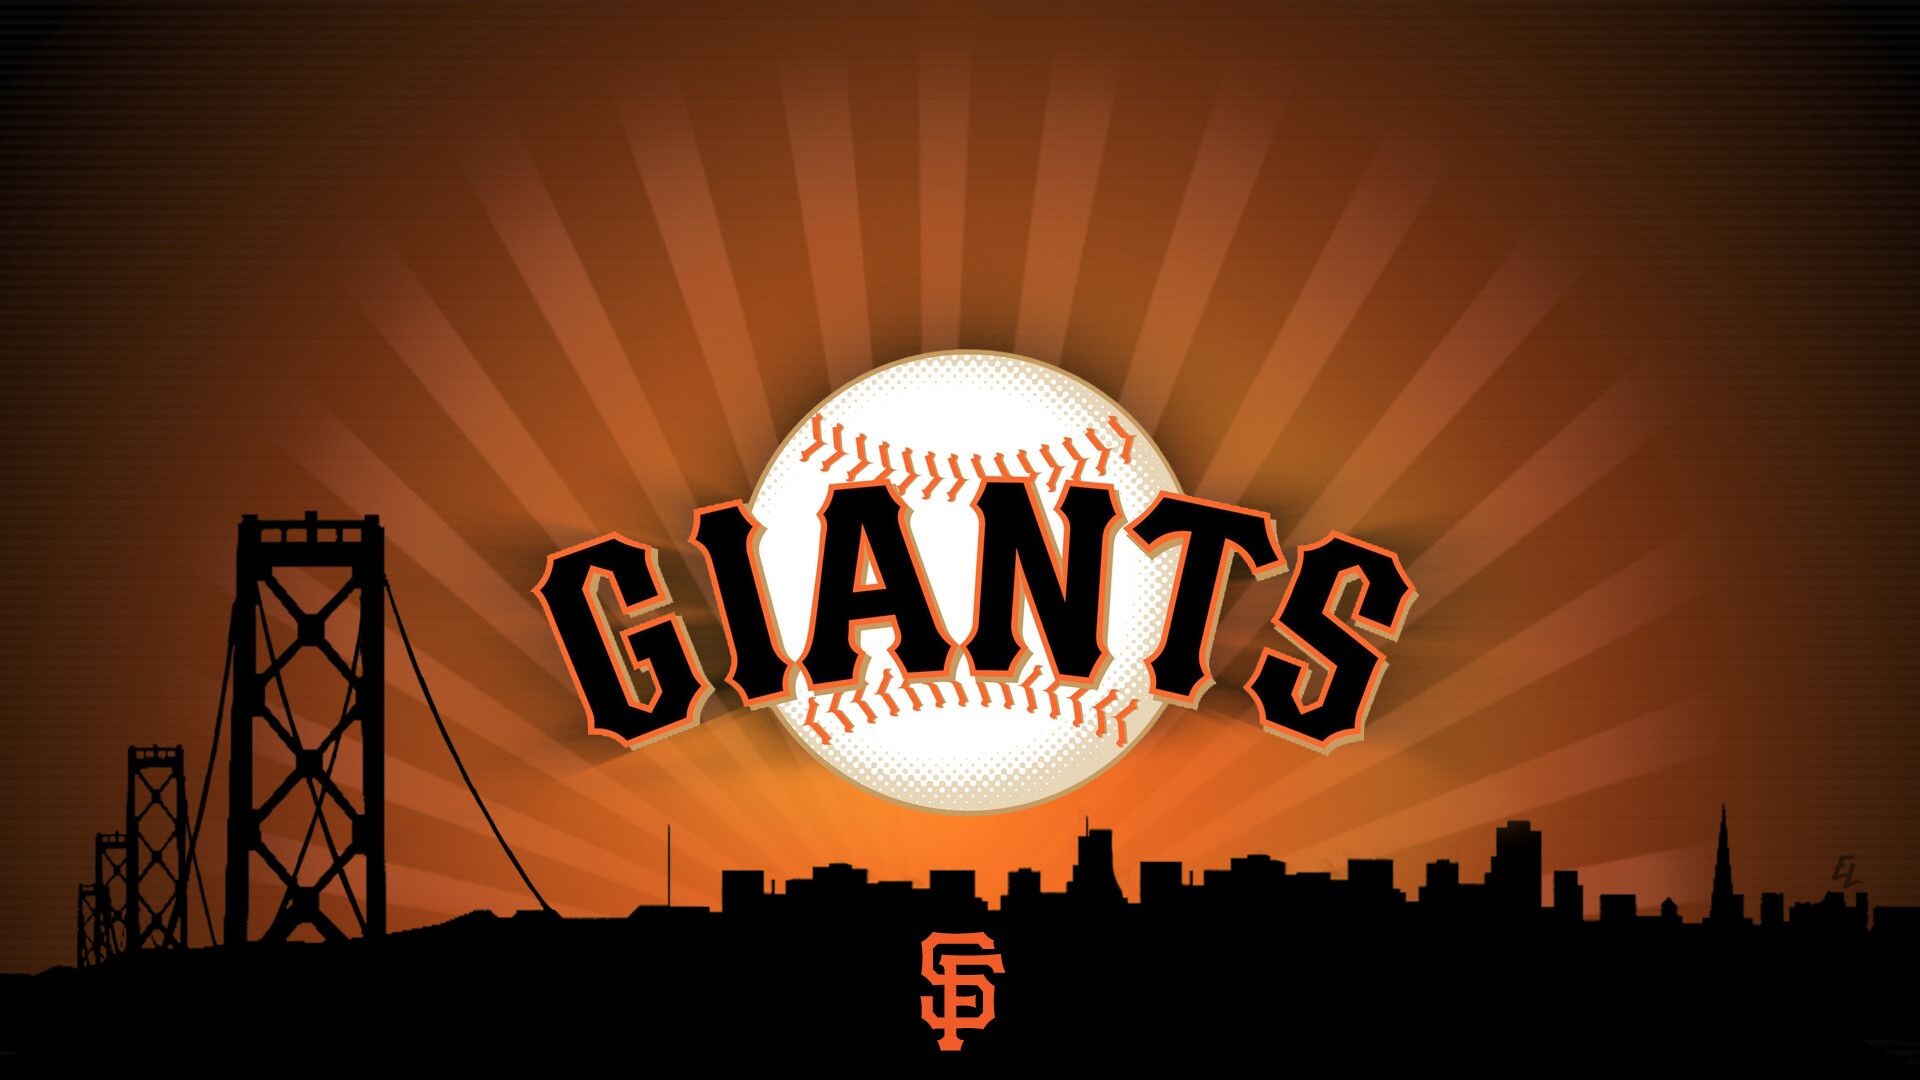 San Francisco Giants: Five-time World Series championships winners, The Baseball Hall of Fame members. 1920x1080 Full HD Wallpaper.